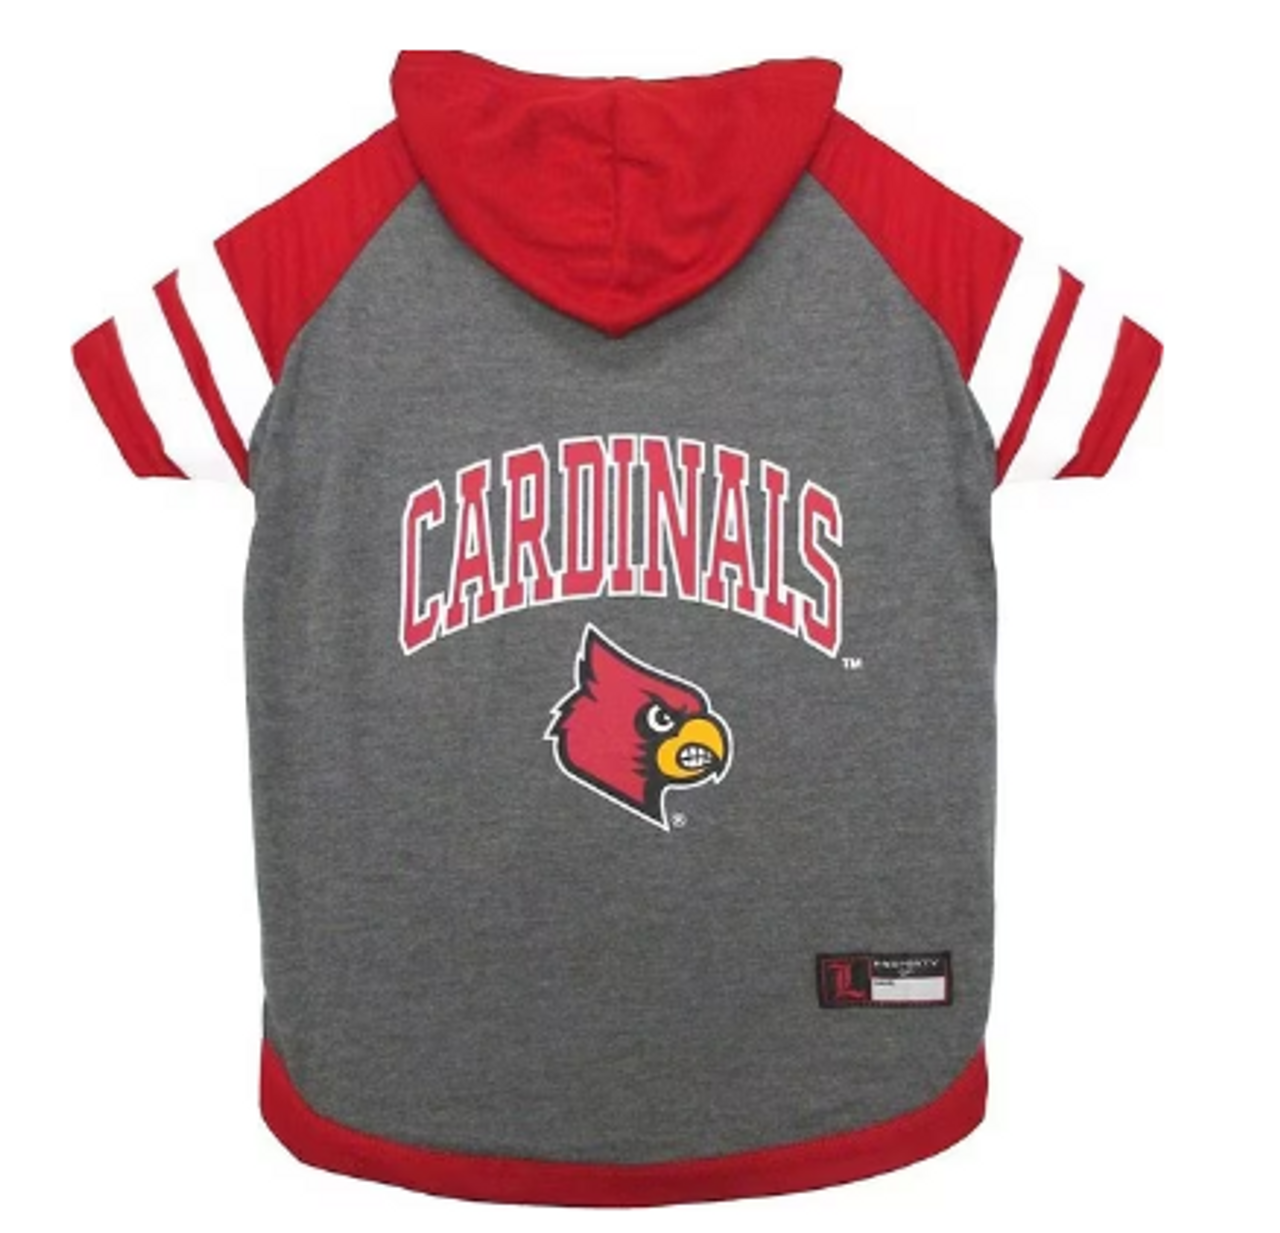 louisville cardinals hoodie for boys